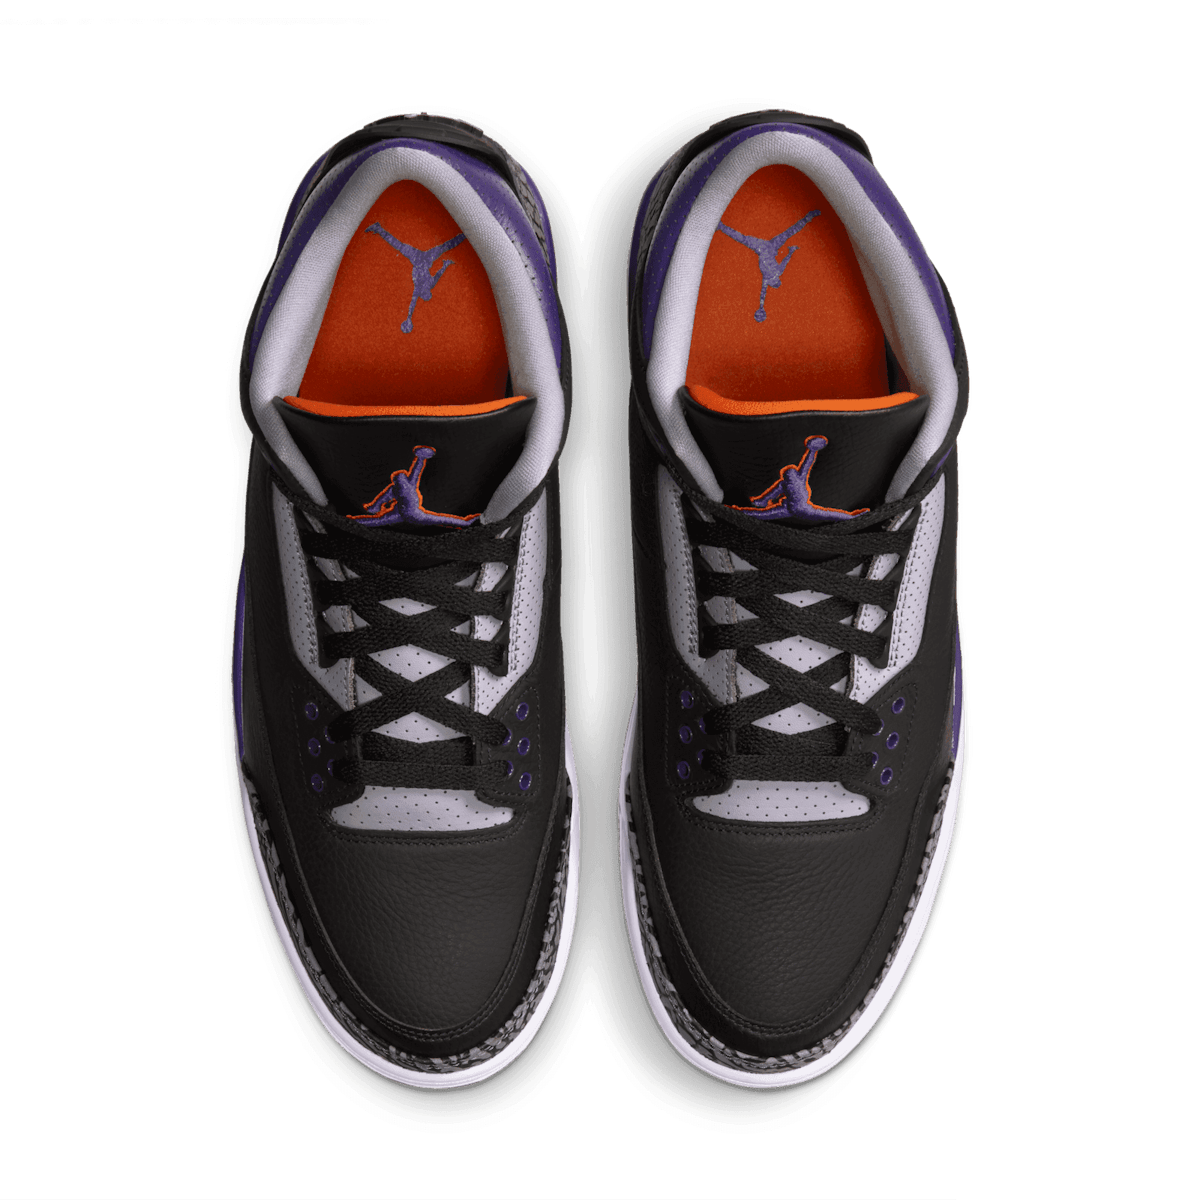 Nike Air Jordan 3 Retro Georgetown (2021) Cement 398614 401 Women